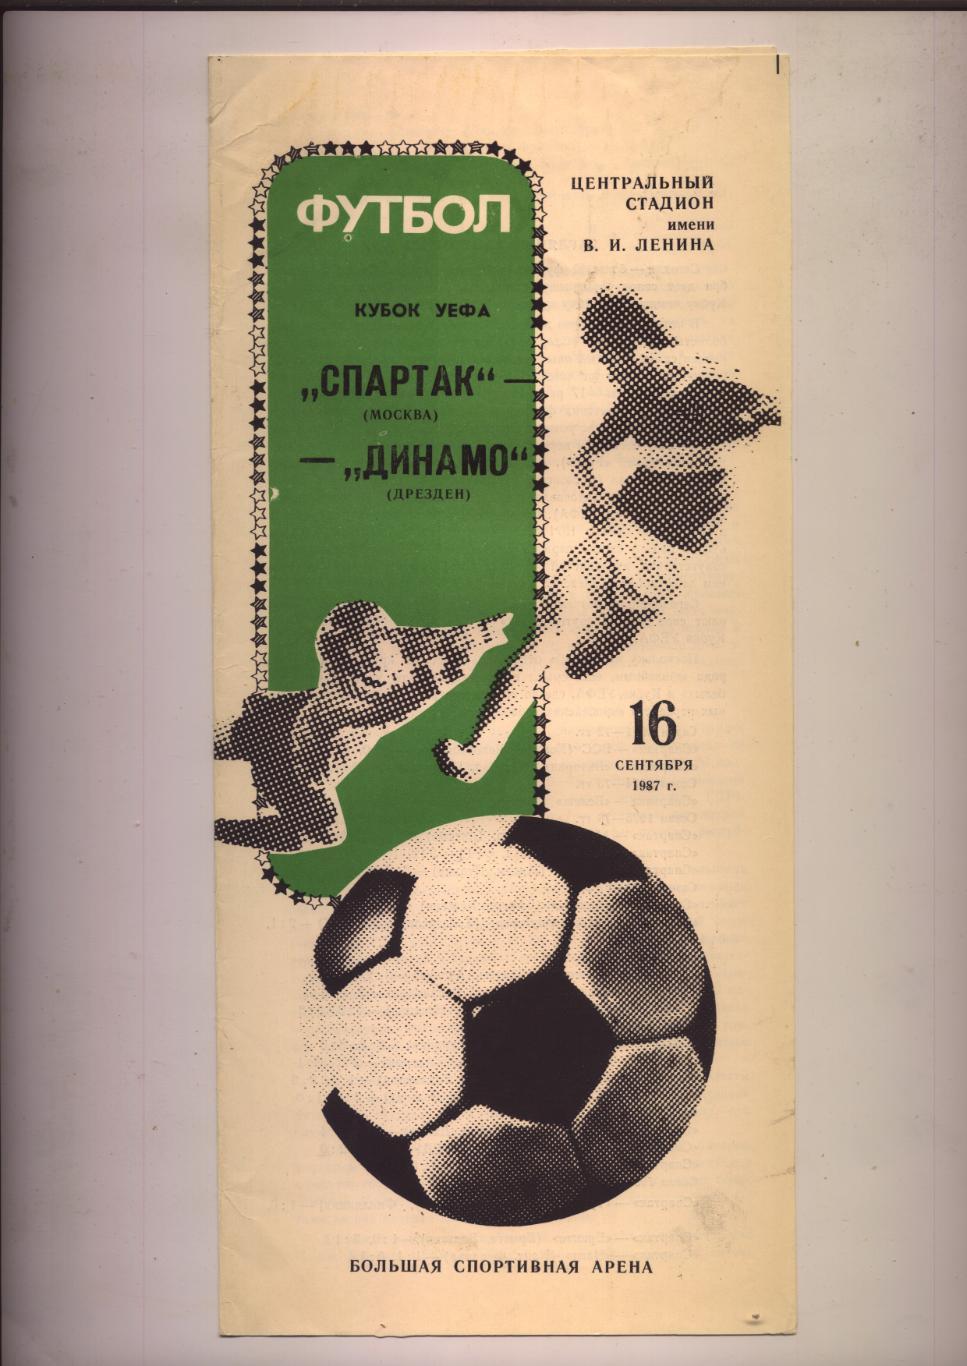 Кубок УЕФА Спартак Москва СССР - Динамо Дрезден 16 09 1987 г.